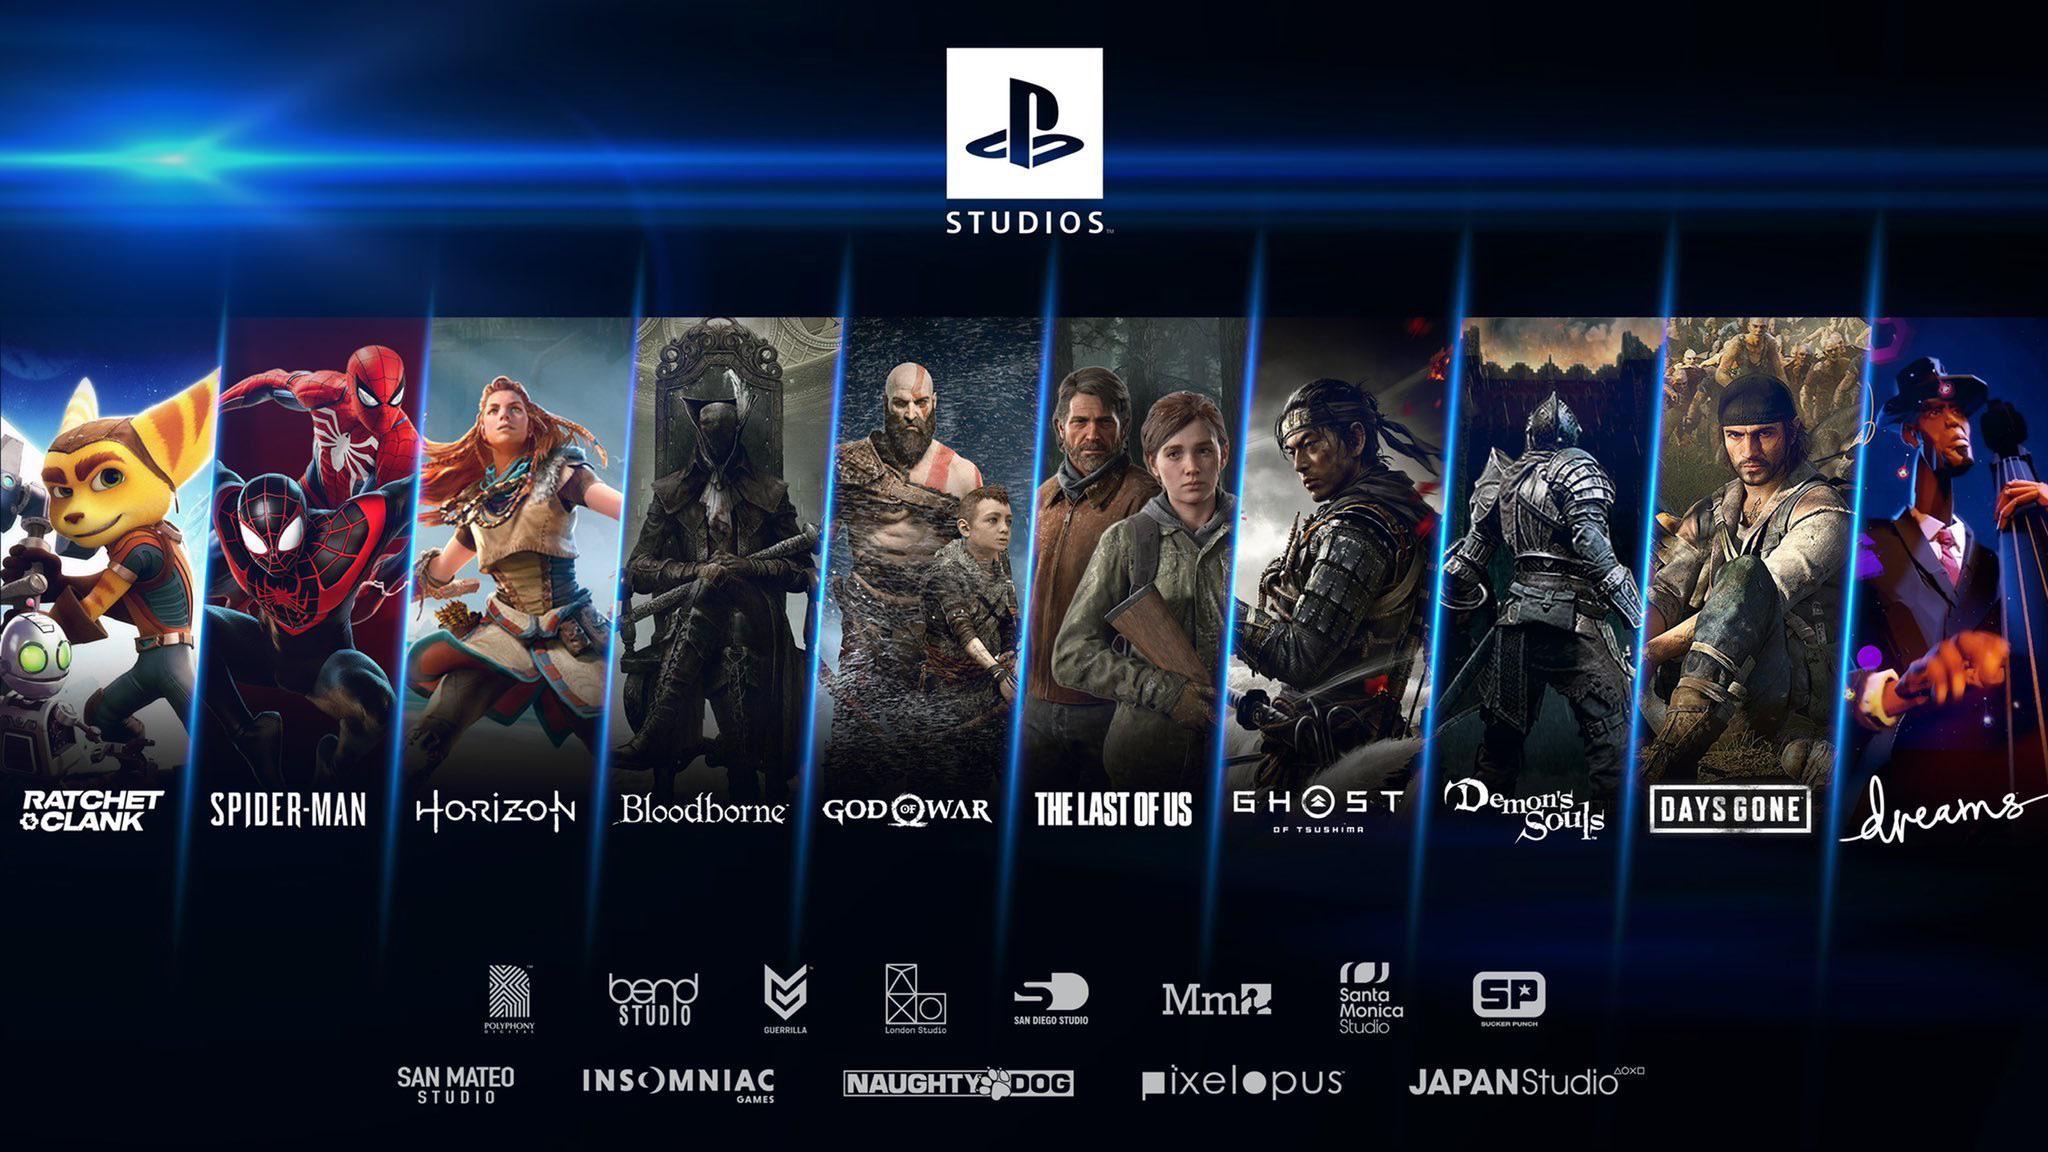 Will Sony's exclusive game portfolio lack genre diversity even more compared to Xbox's? Gaming